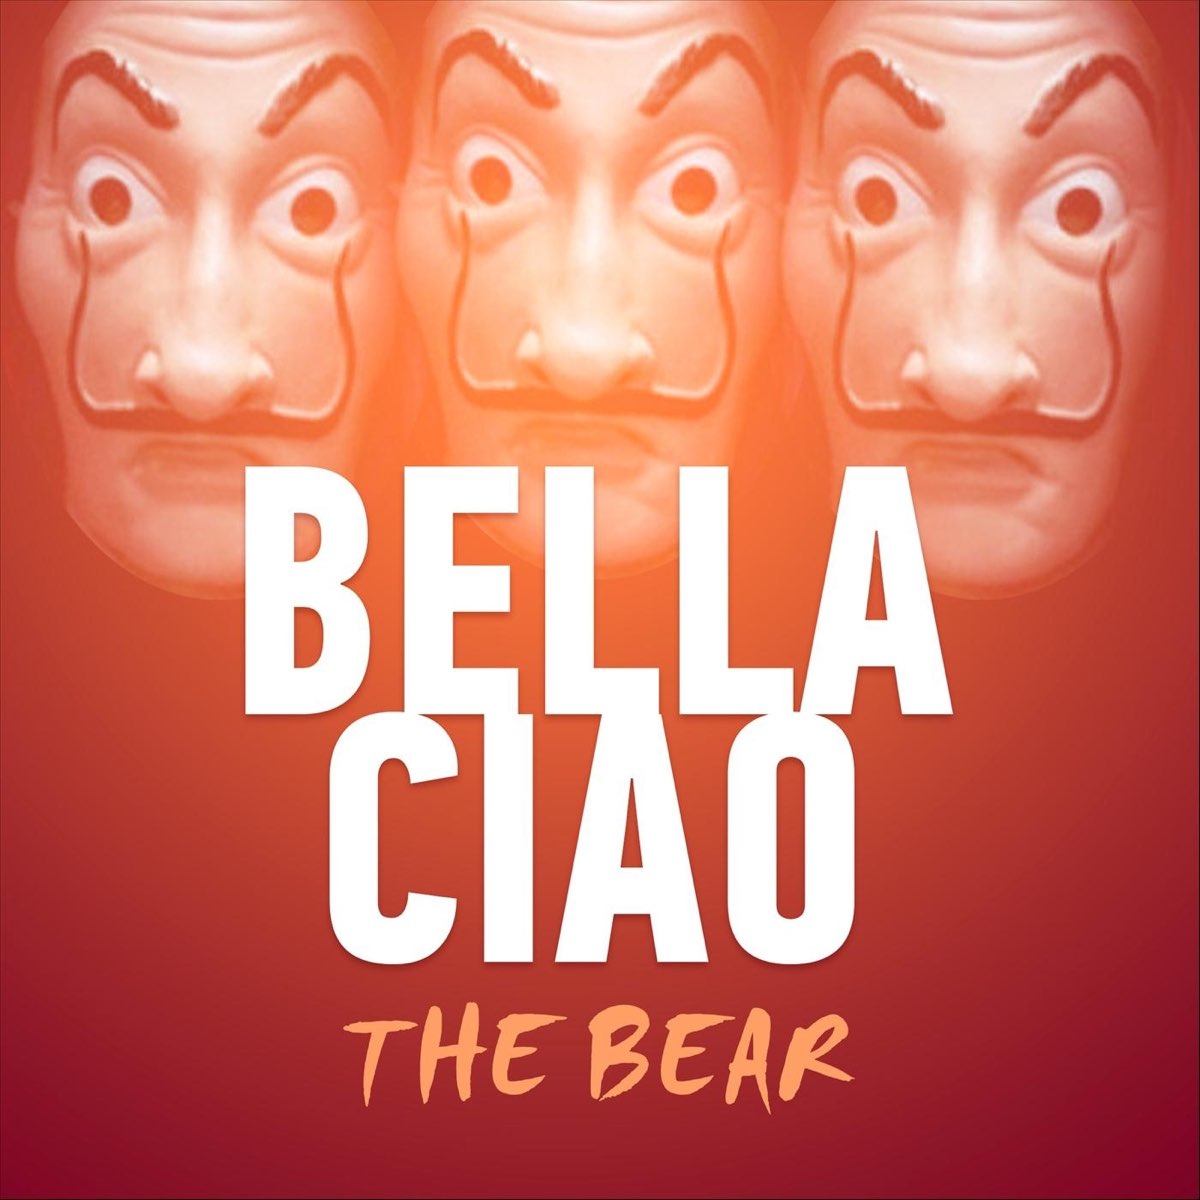 Bella Ciao - Single - Album by The Bear - Apple Music